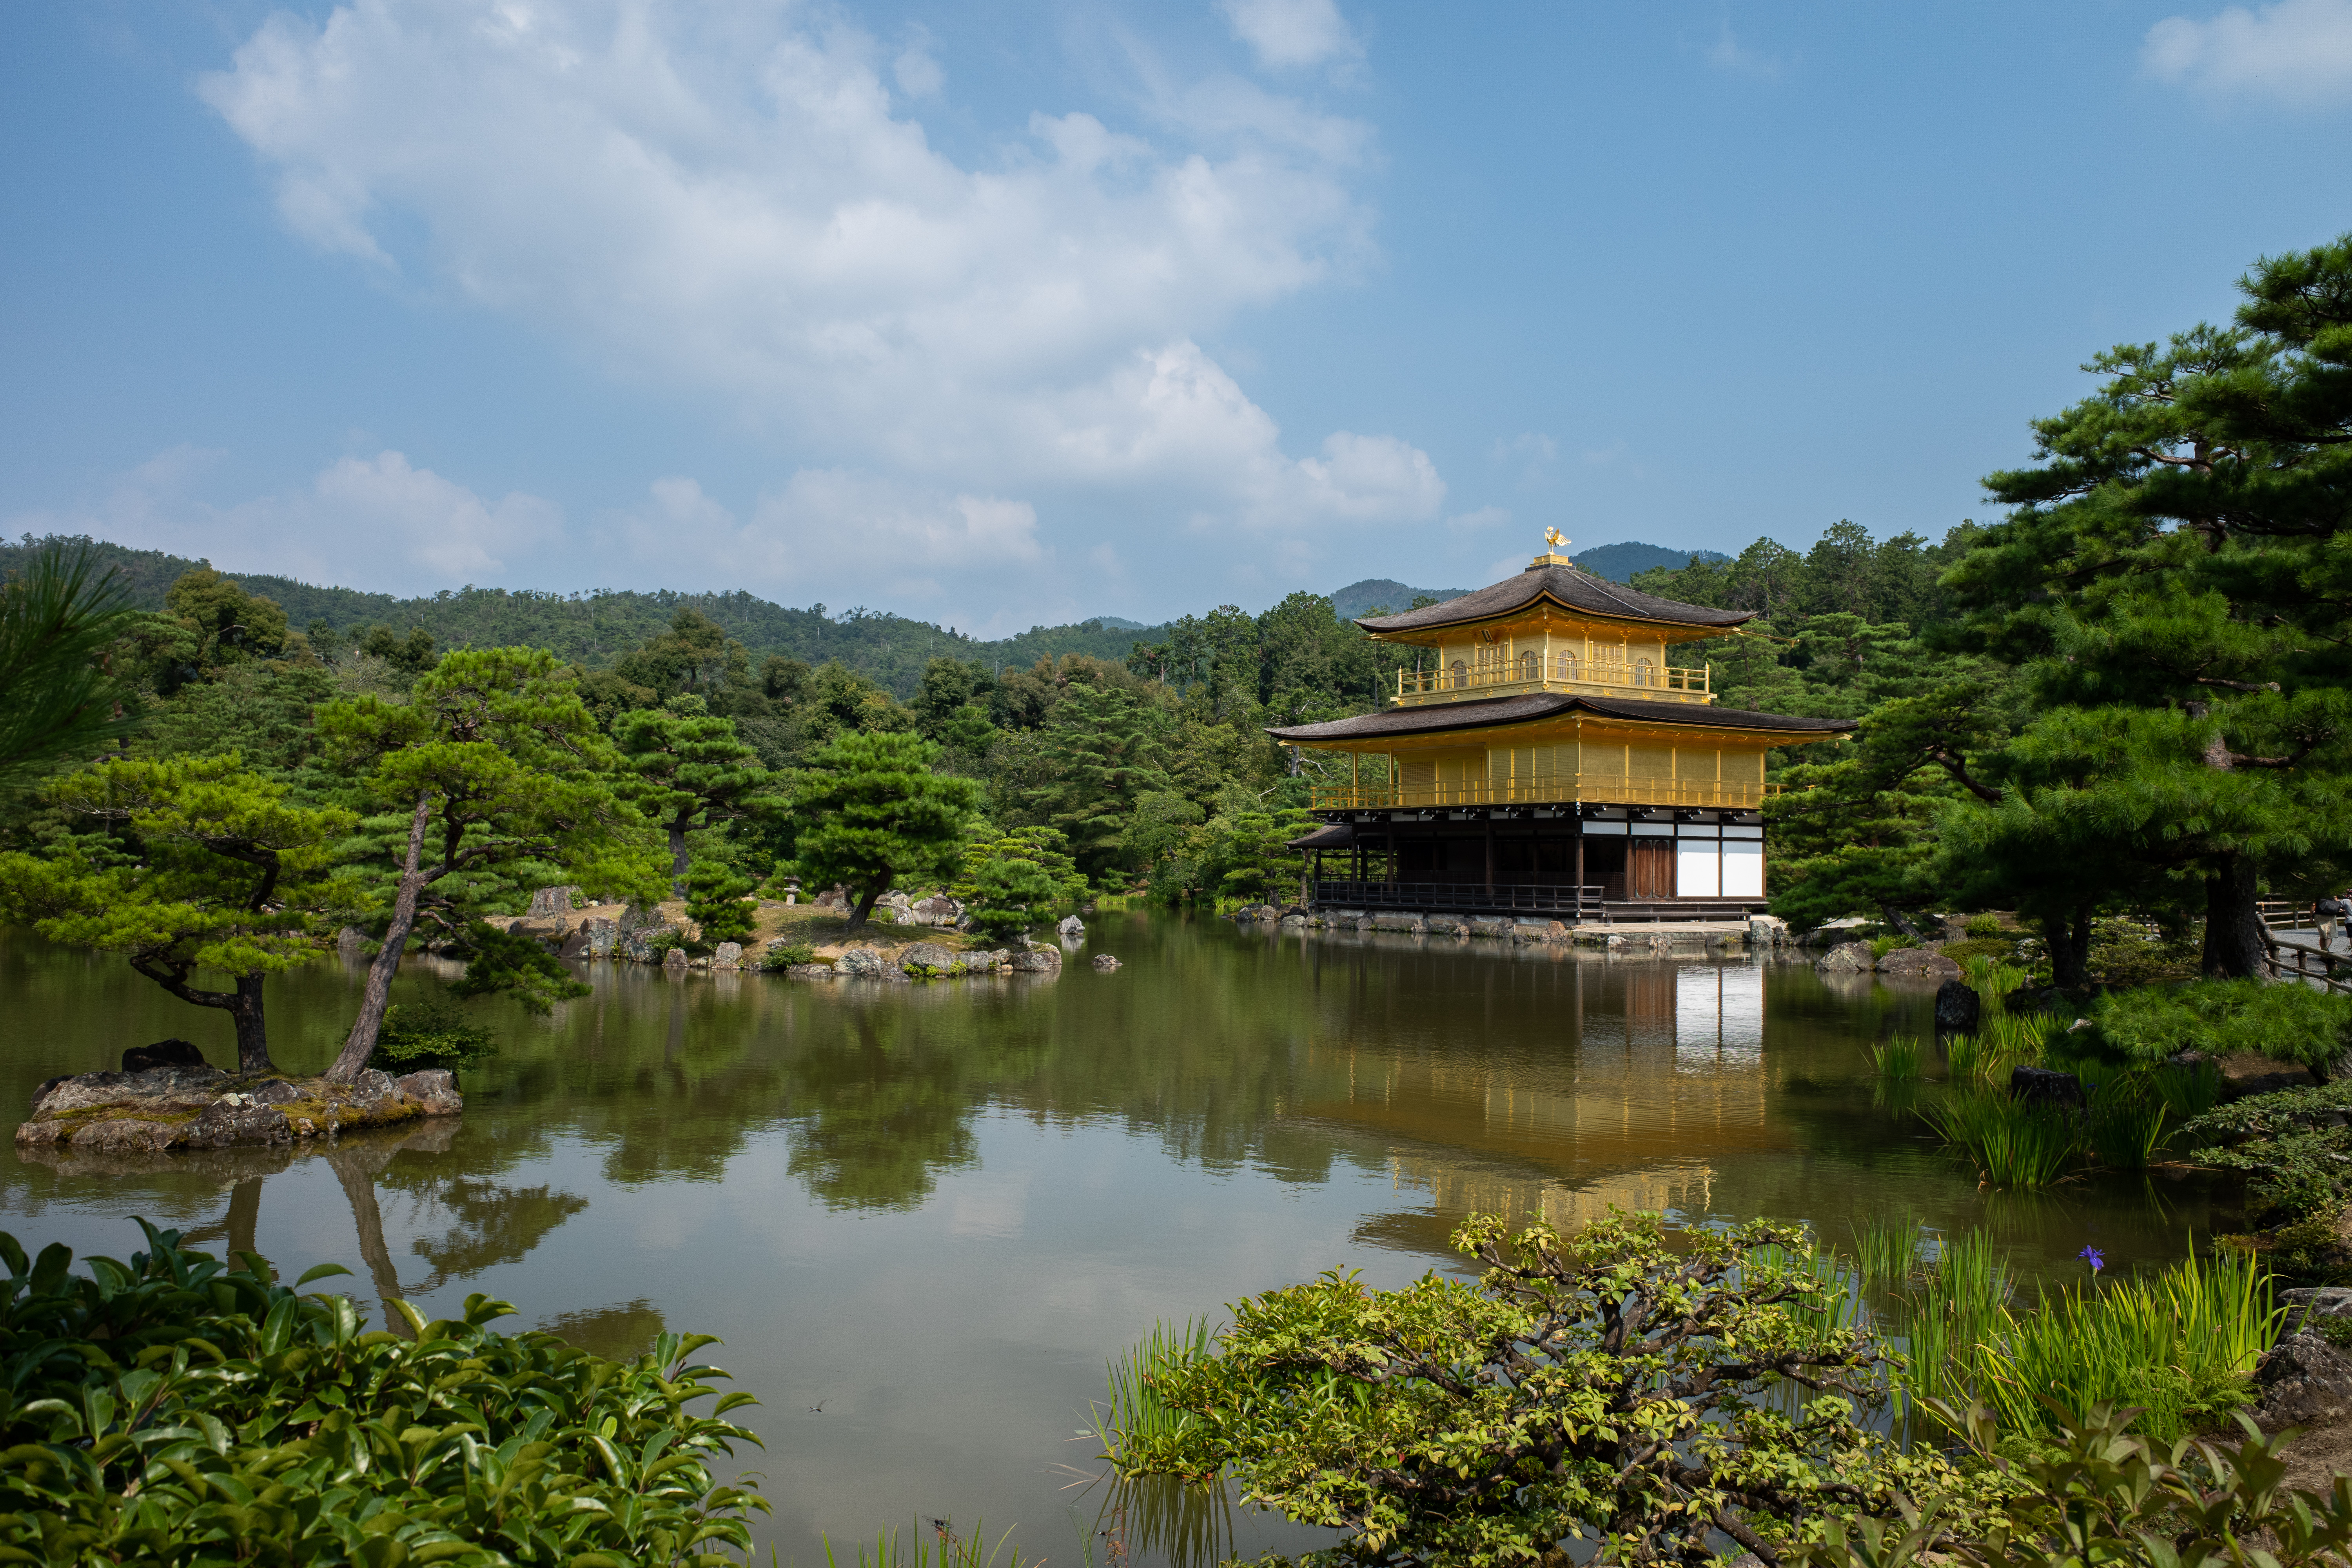 General 6000x4000 Japan kinkakuji temple Kyoto Asia outdoors trees